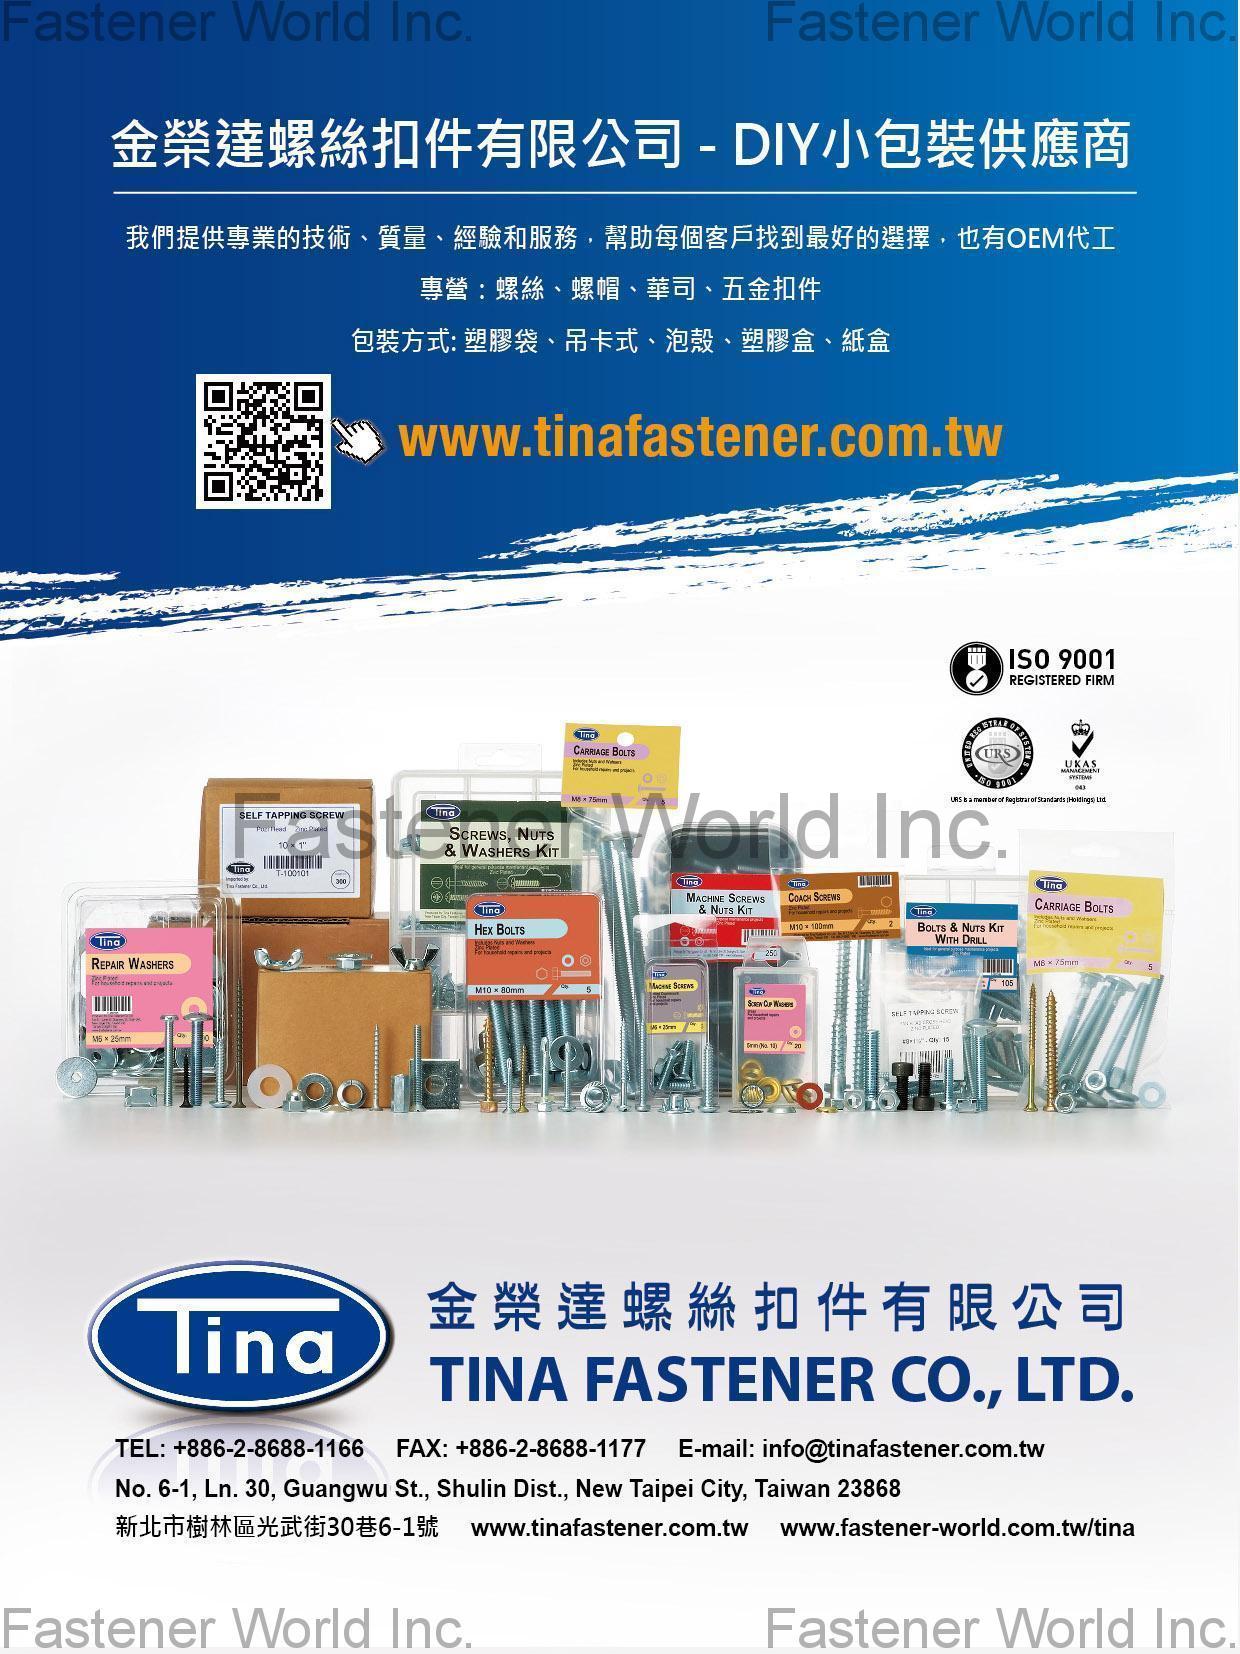 Tina Fastener Co., Ltd. , DIY small packages 小螺絲包 , Fastener Kits